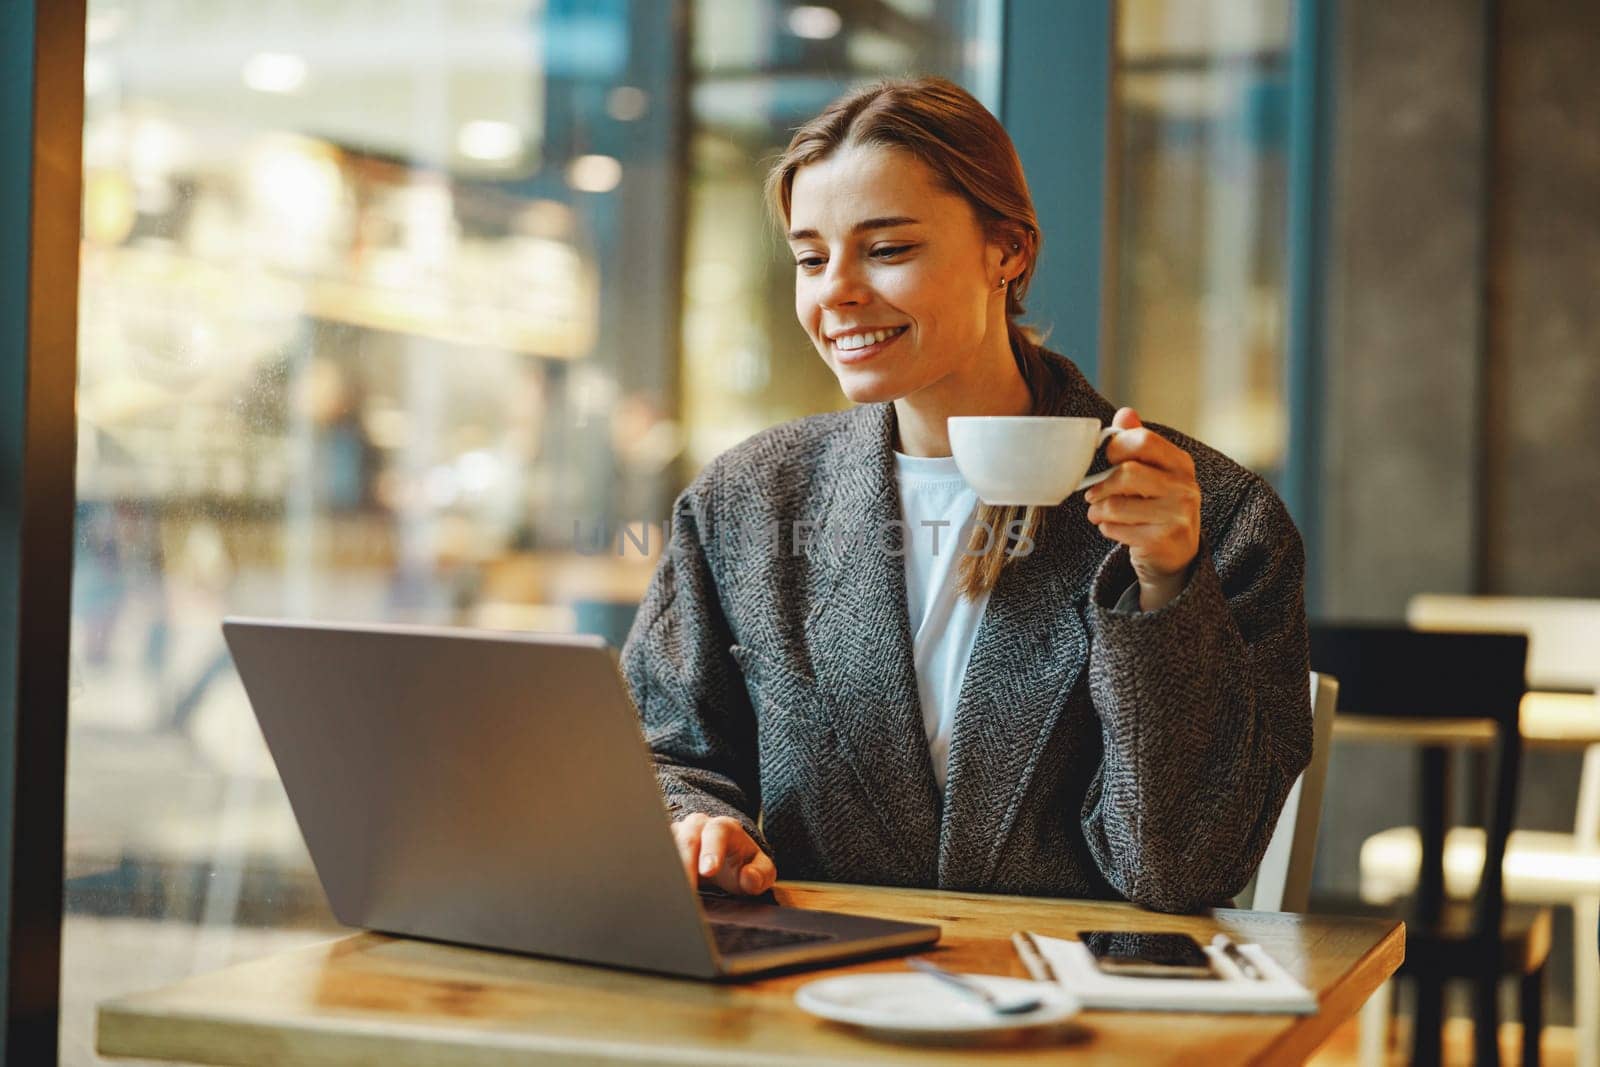 Smiling female entrepreneur is drinking coffee in coworking while working on laptop near window by Yaroslav_astakhov